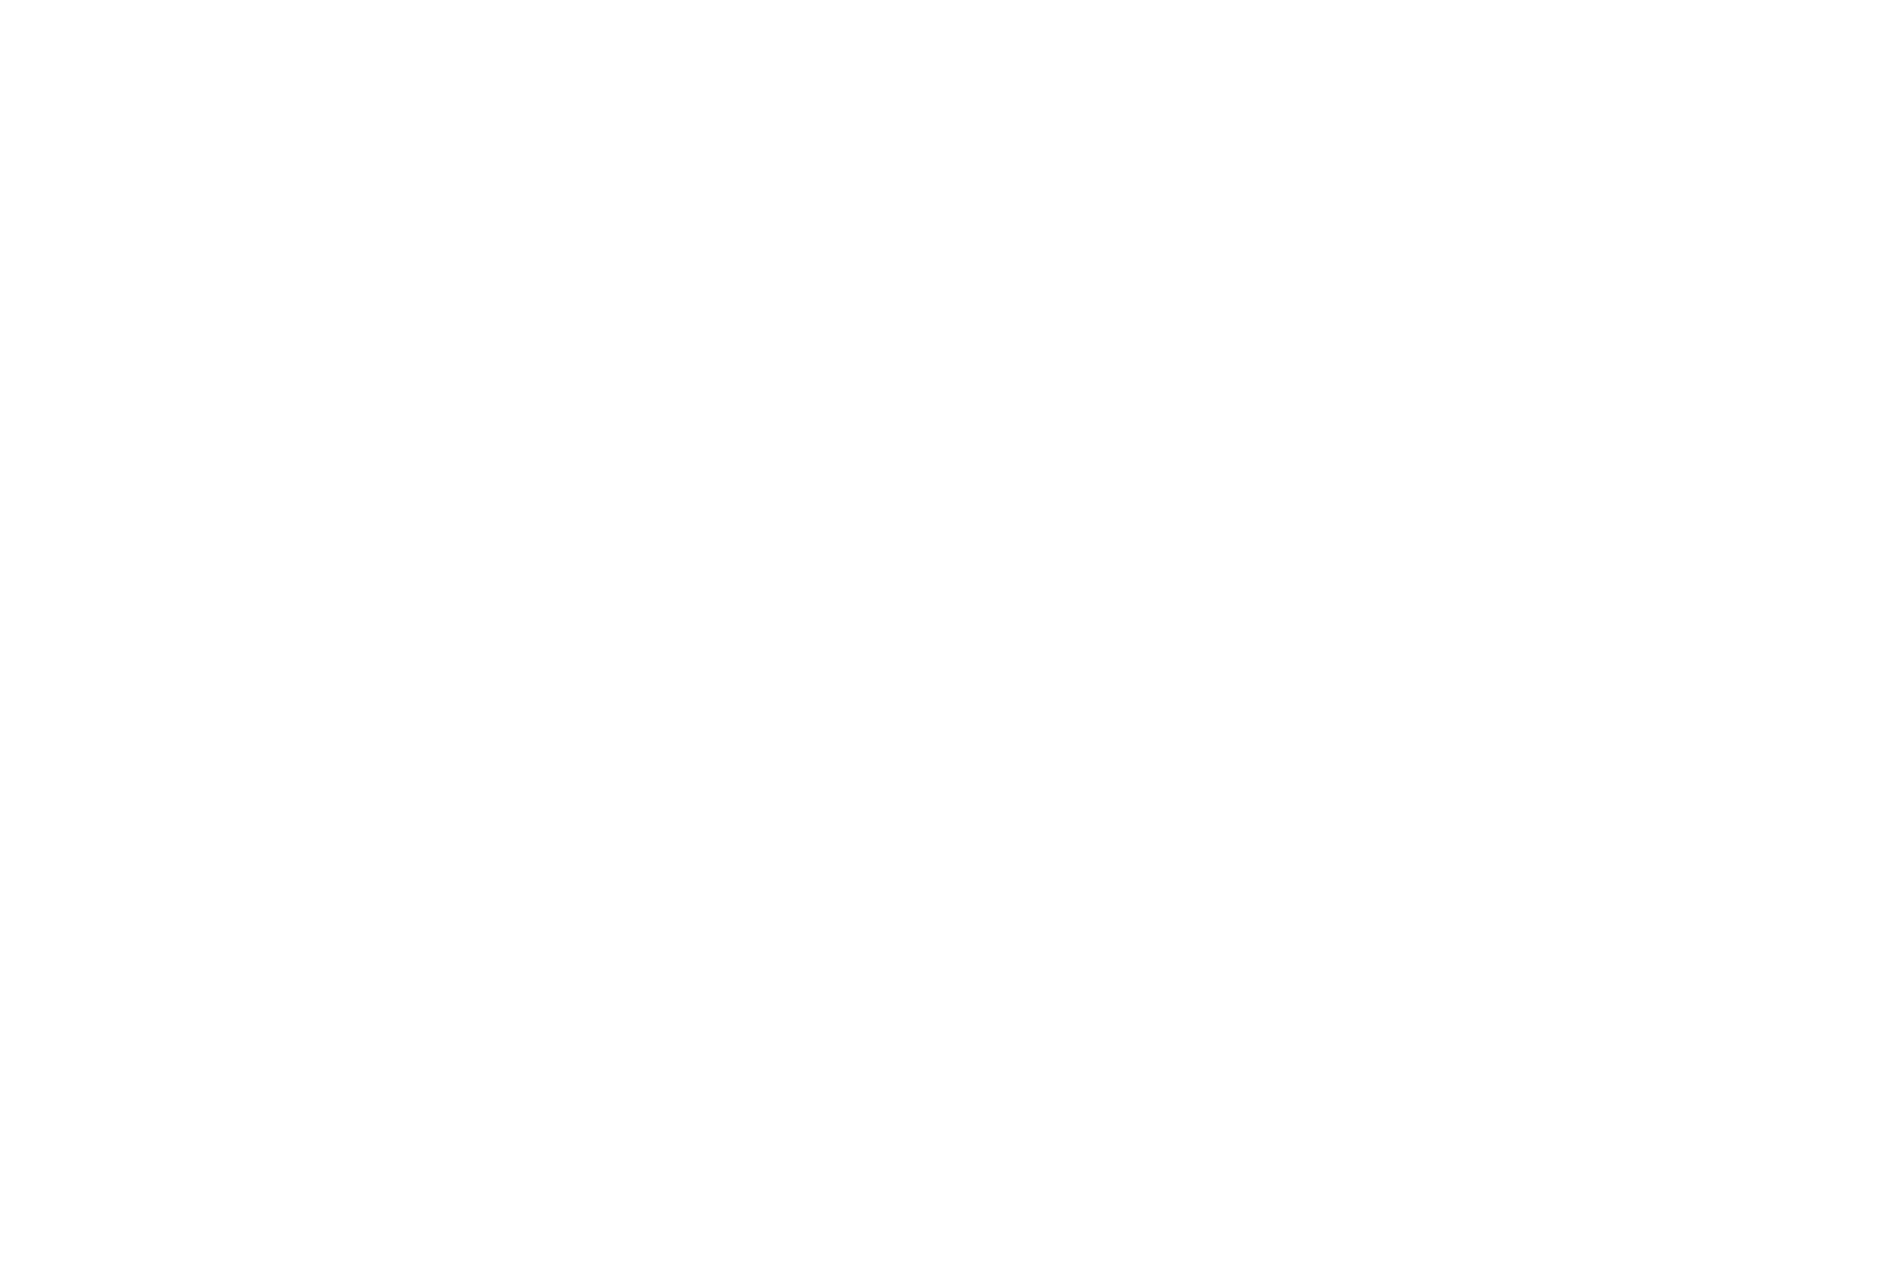 btb surveyors